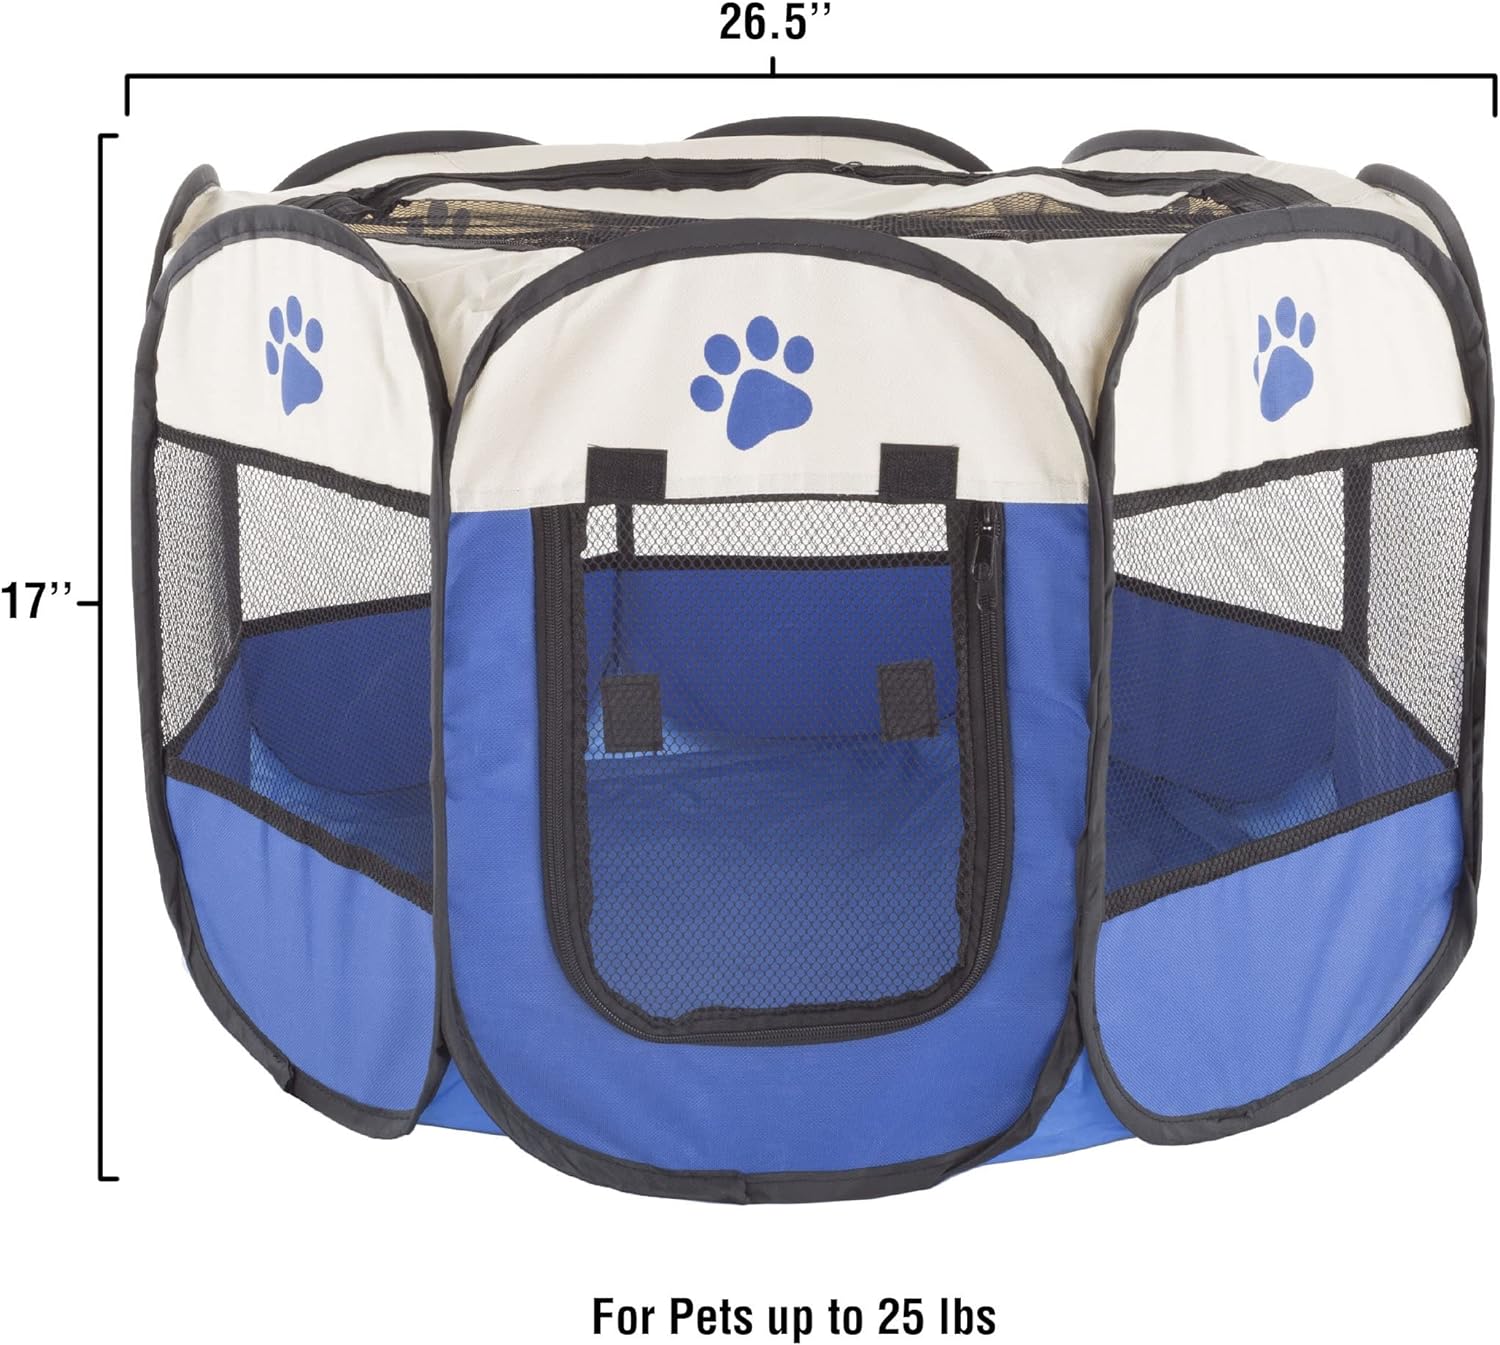 PETMAKER Corralito plegable para mascotas con funda de transporte, para uso en